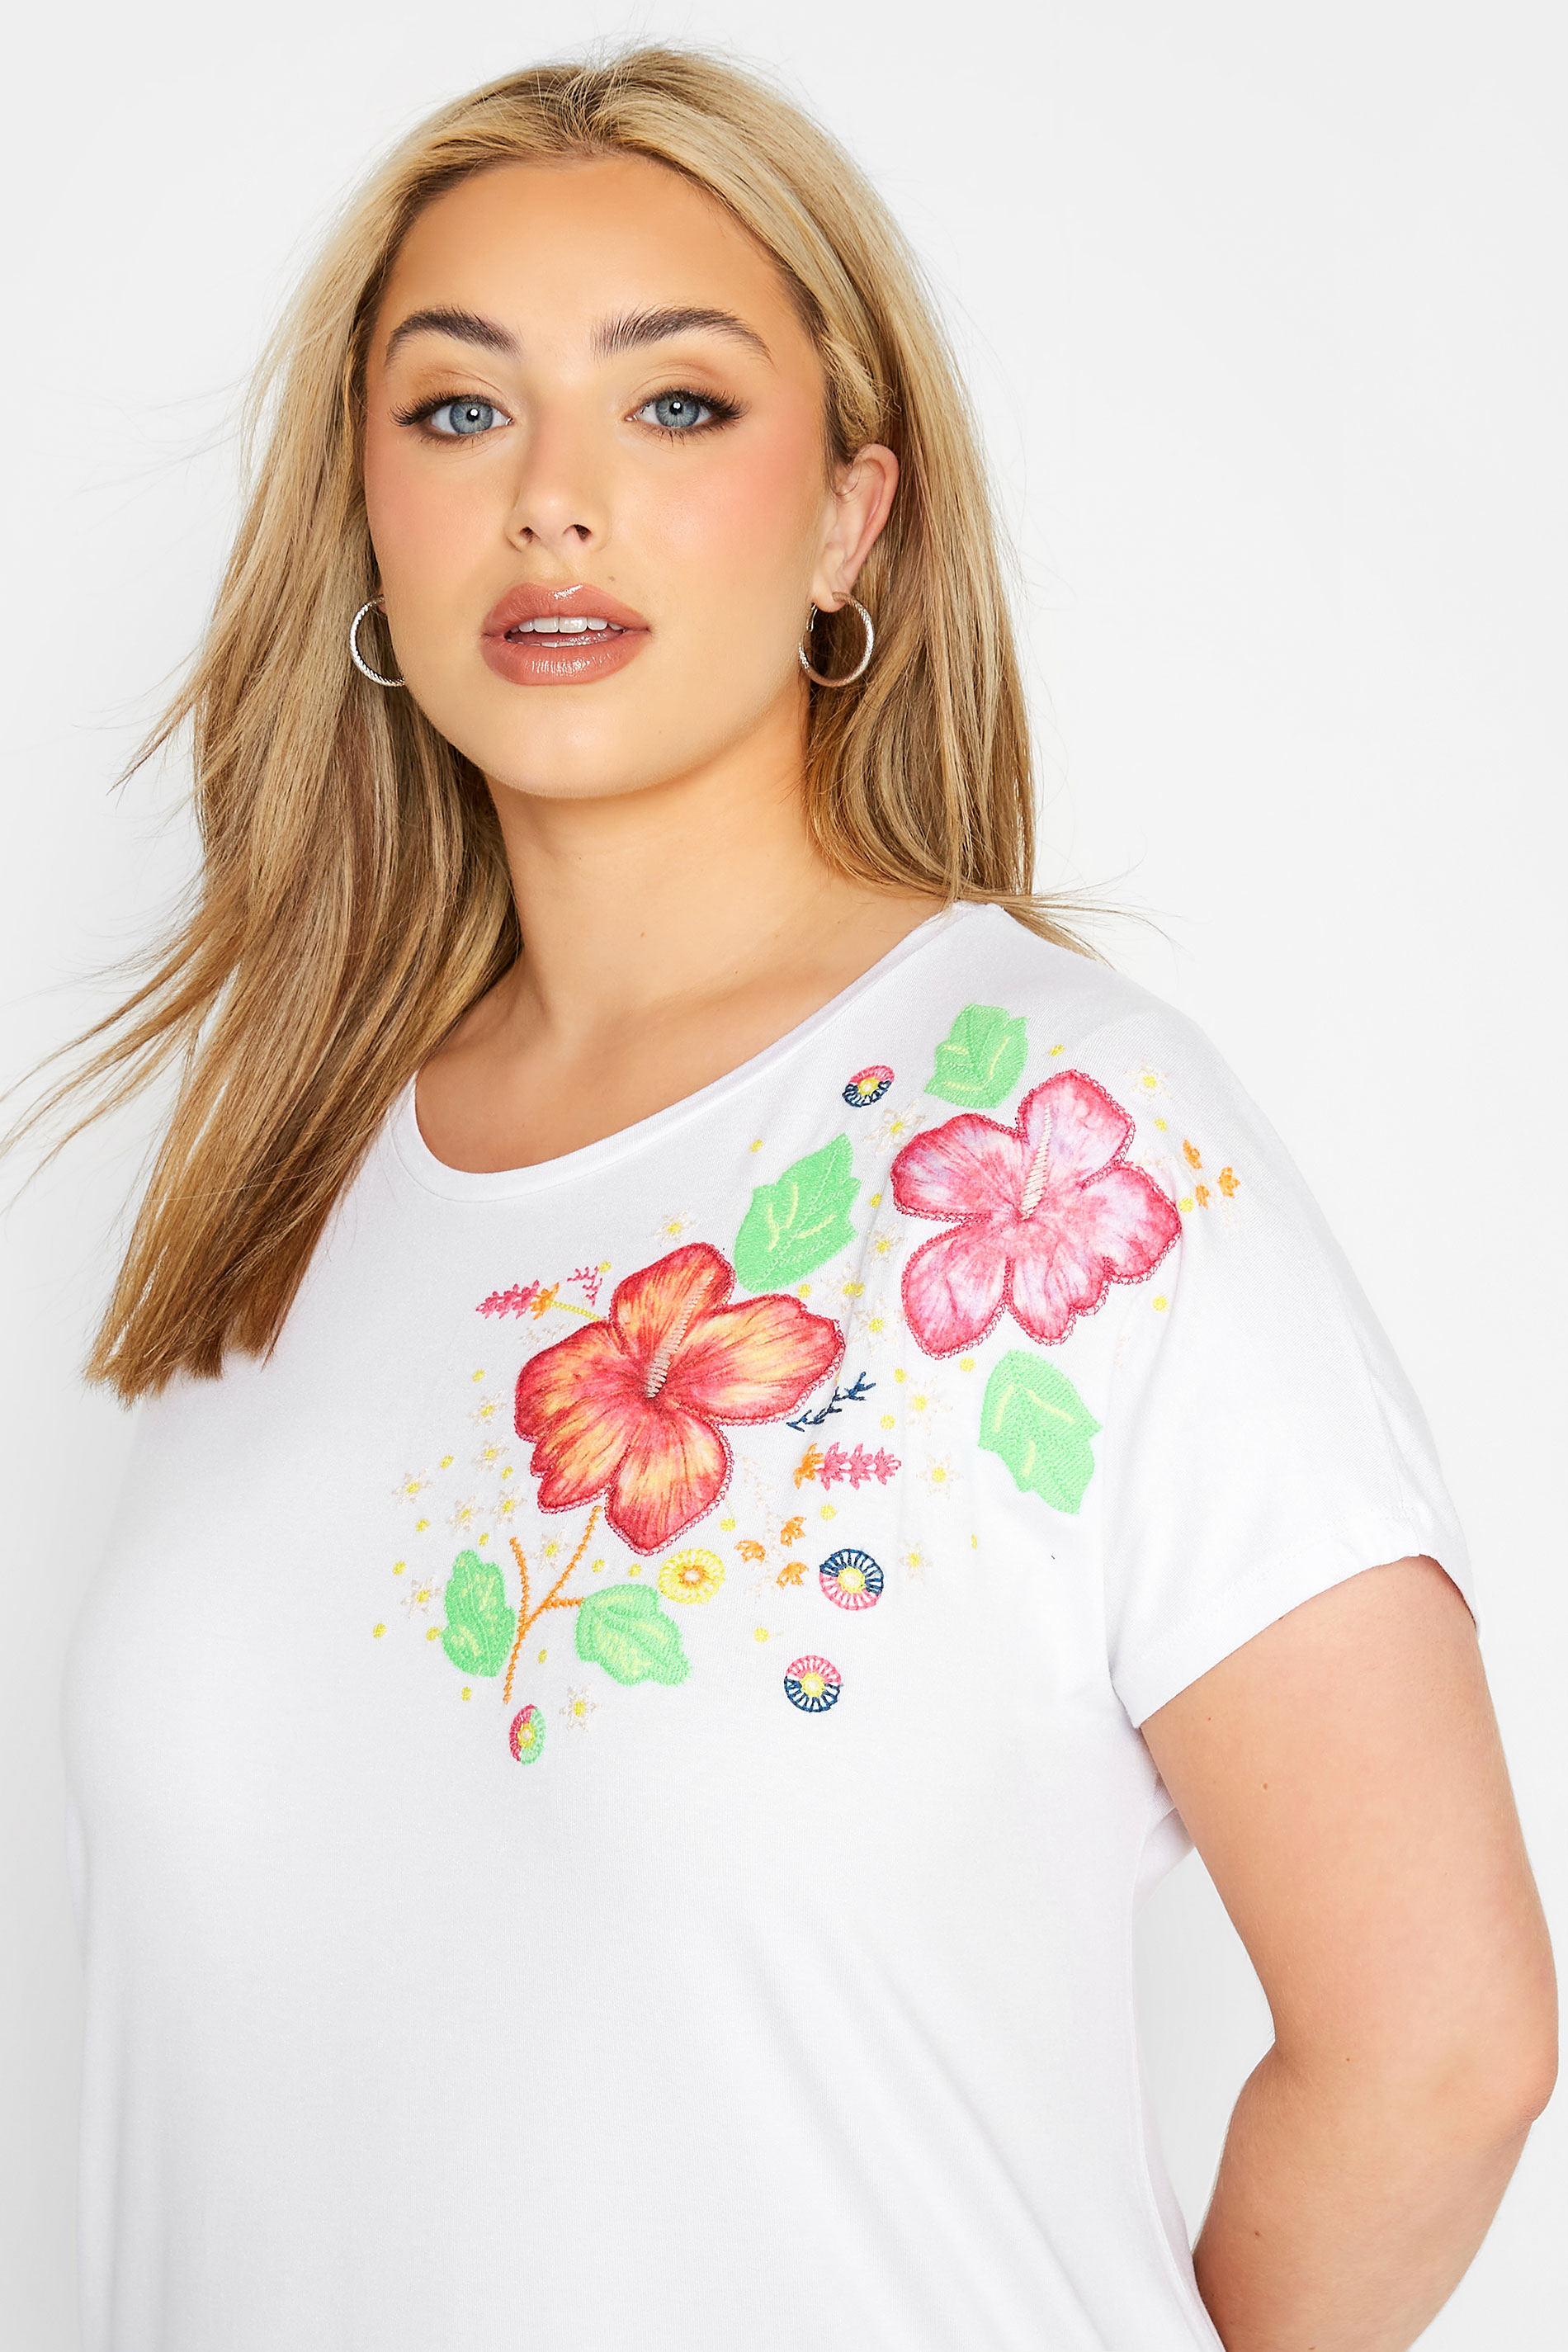 Grande taille  Tops Grande taille  T-Shirts | T-Shirt Blanc Manches Courtes en Floral - UQ07064